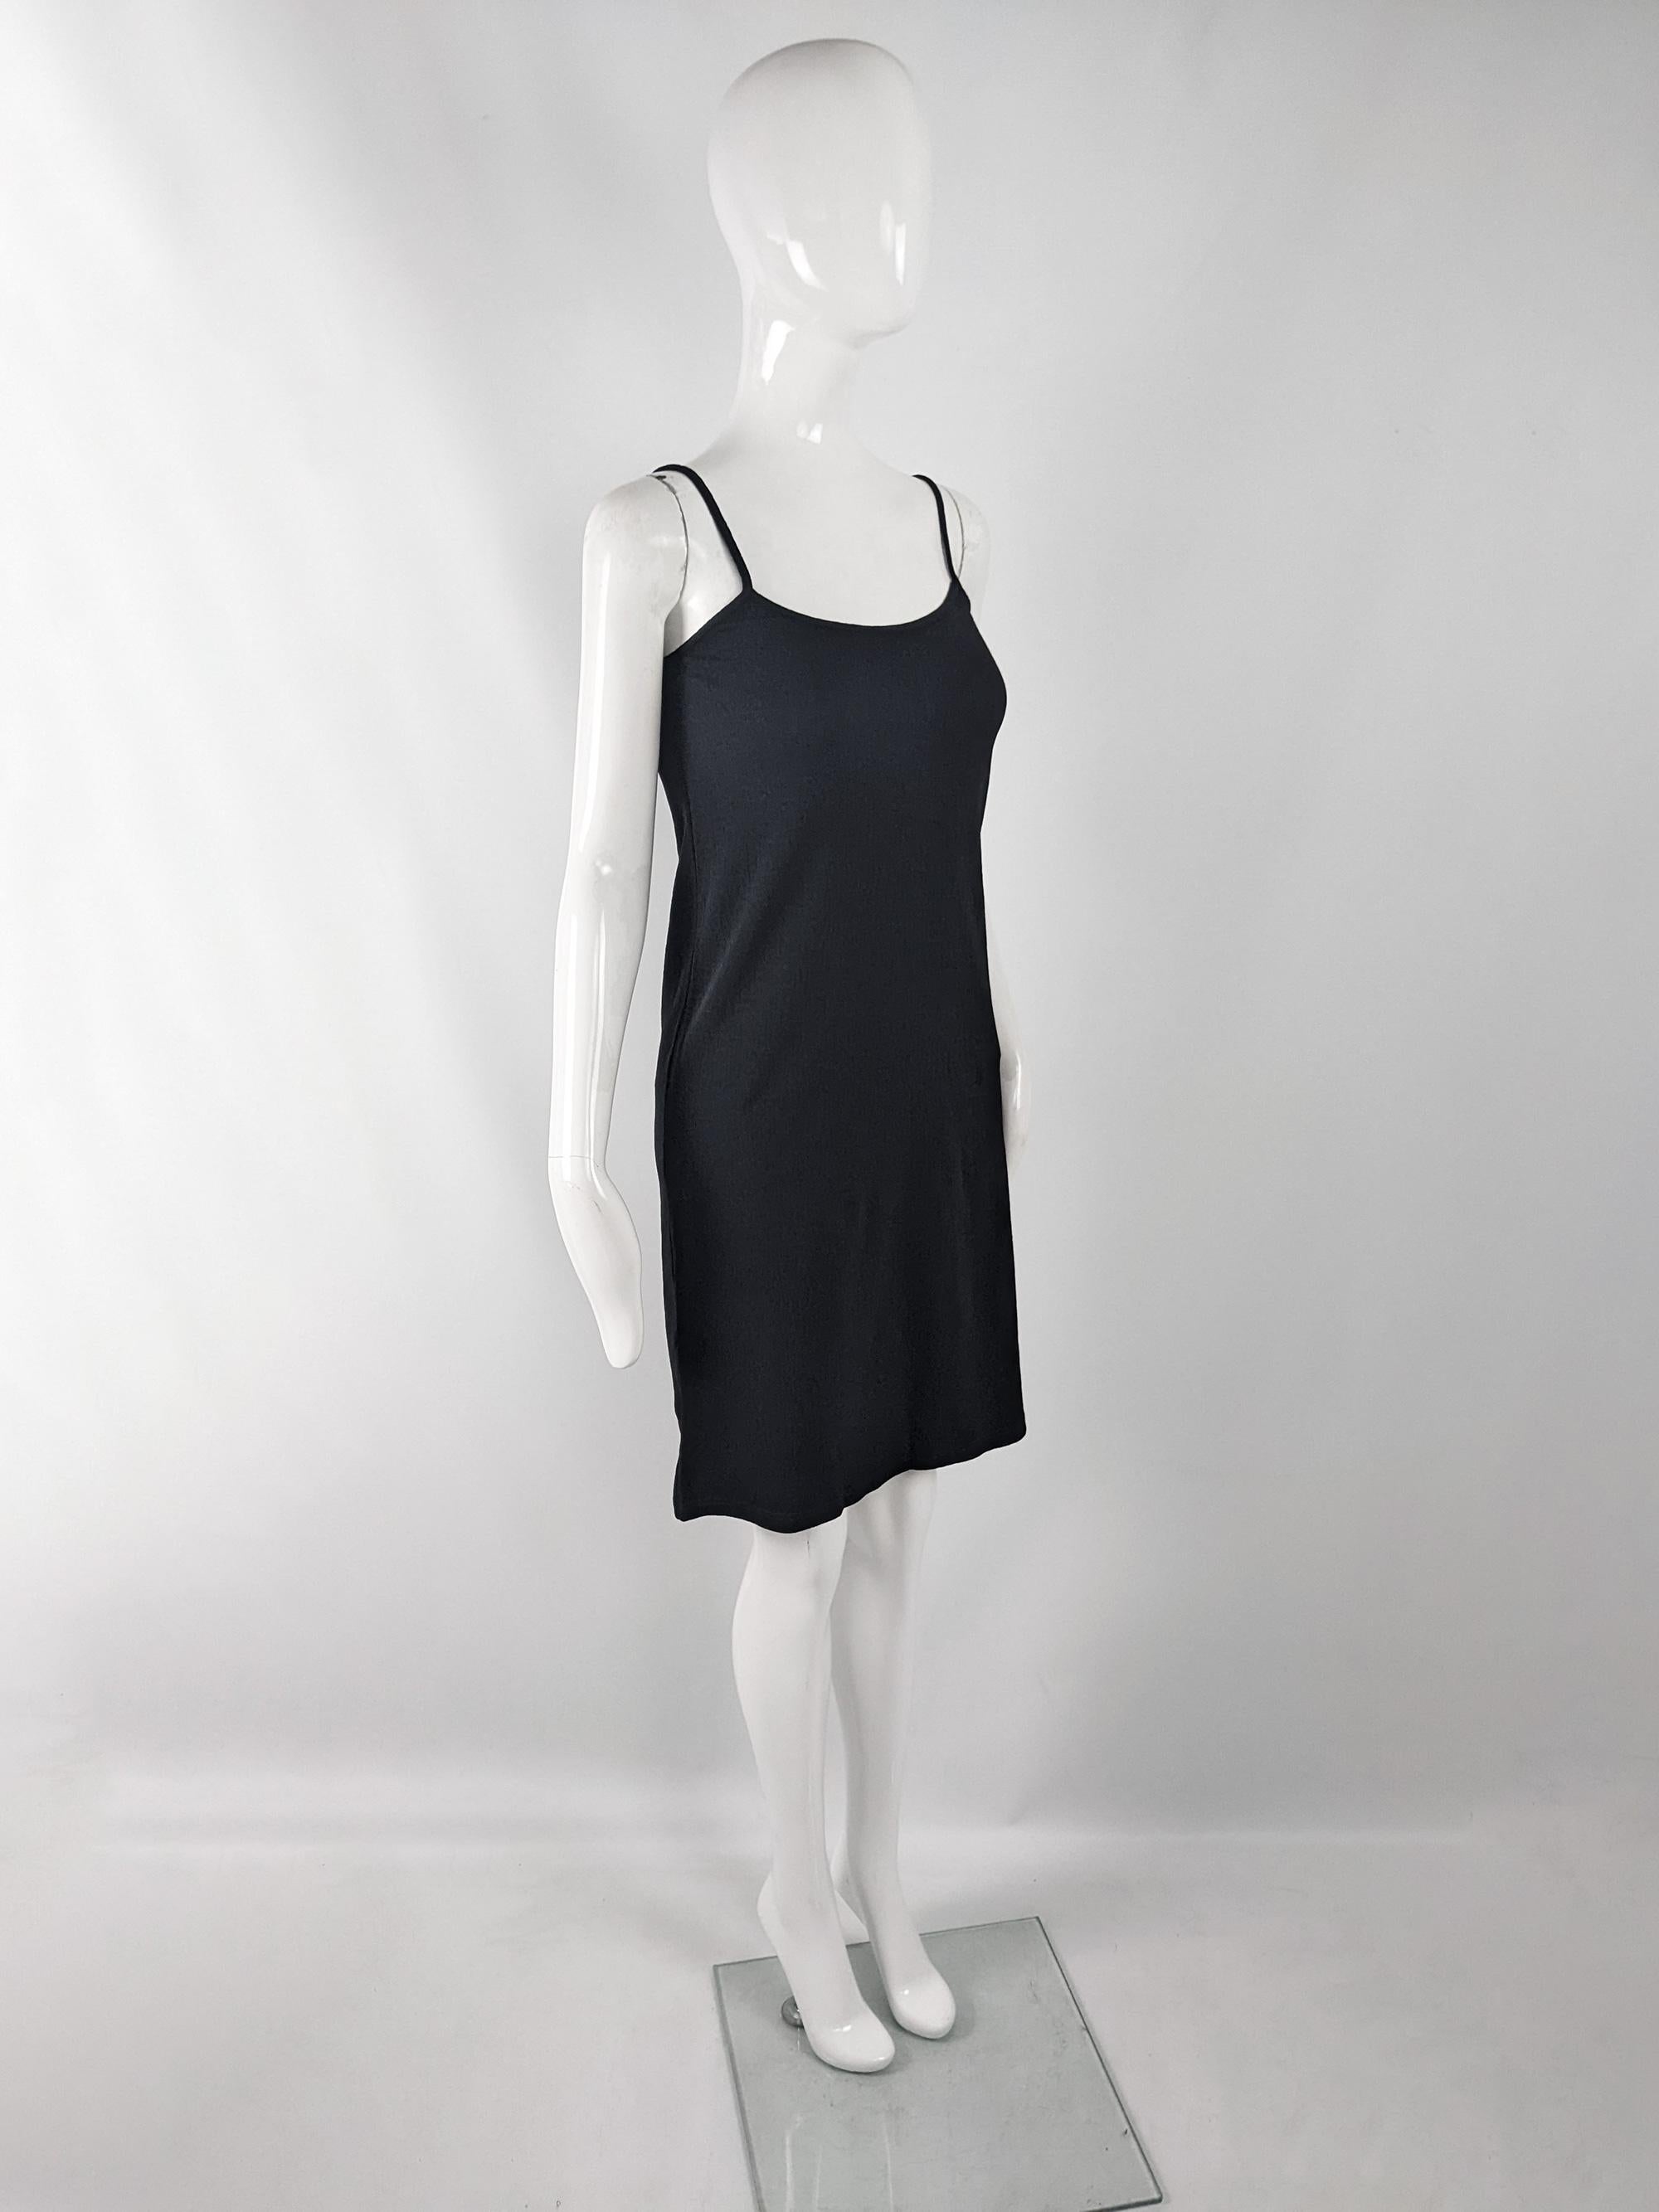 Fendi Vintage Fendissime Logo Pattern Simple Little Black Shift Dress, 1990s For Sale 2